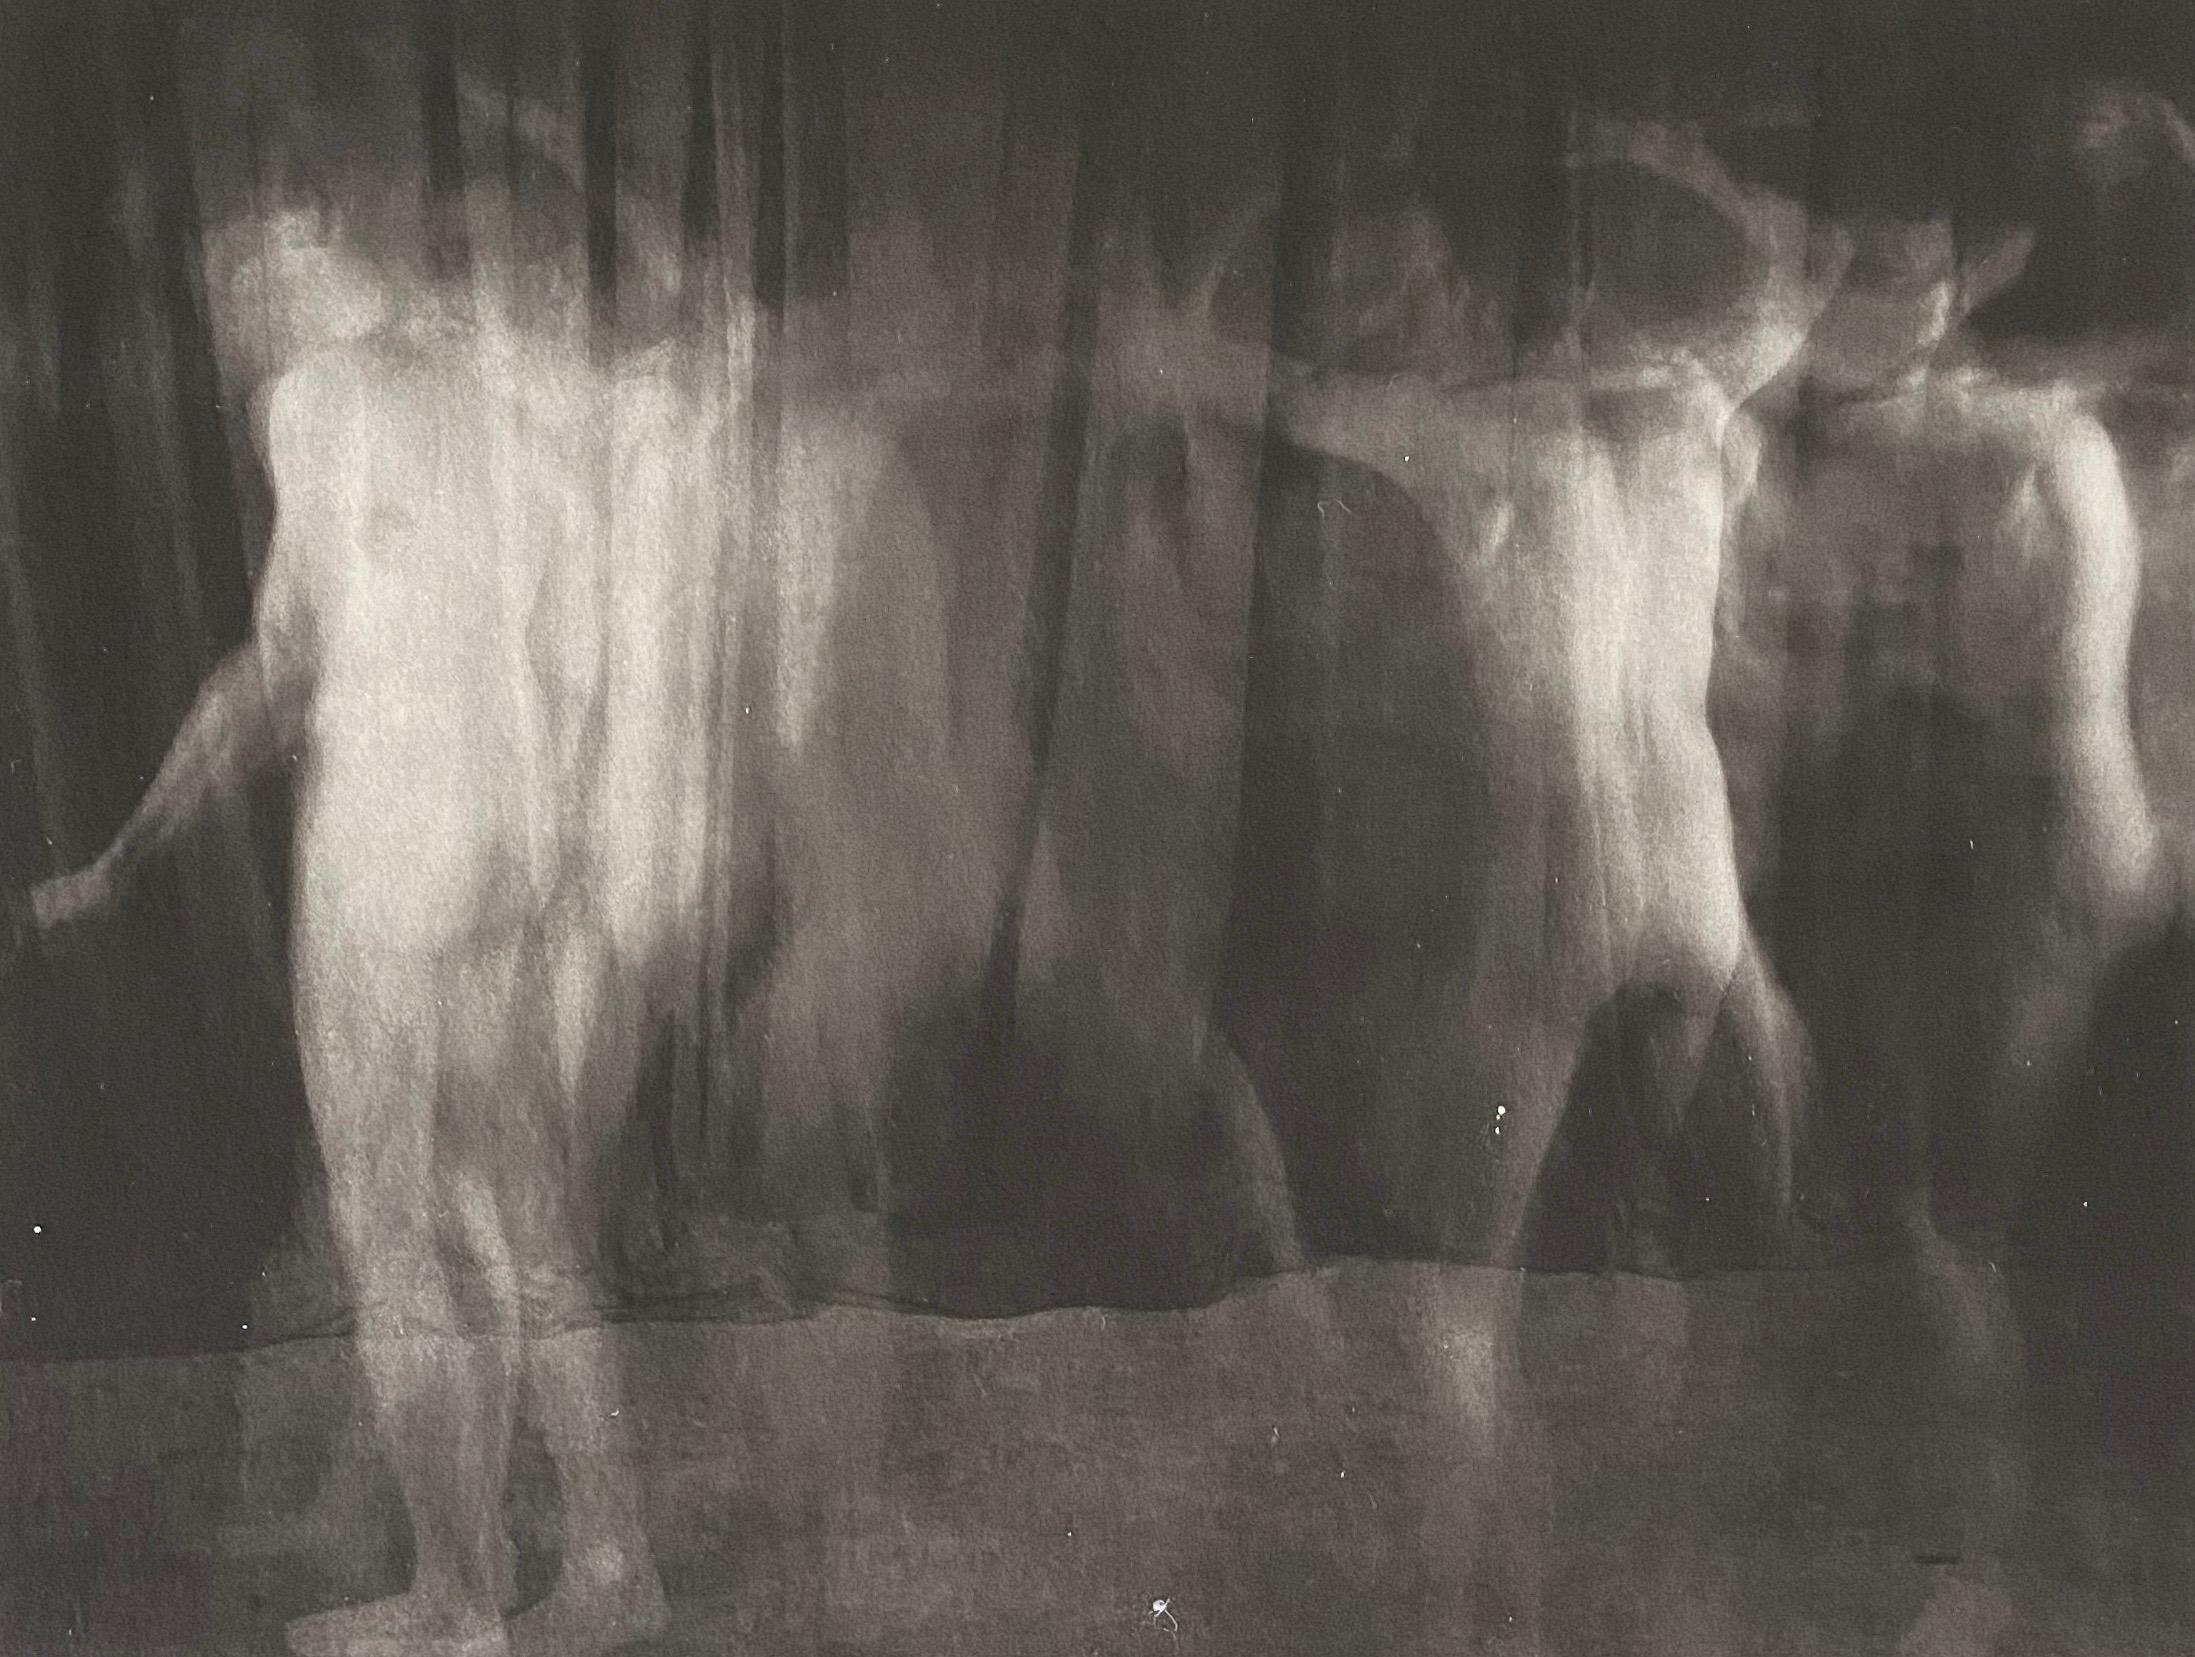 Nude Photograph Skip Arnold - Photographie vintage d'homme nu en platine imprimé 'Ring Around the Rosie' 